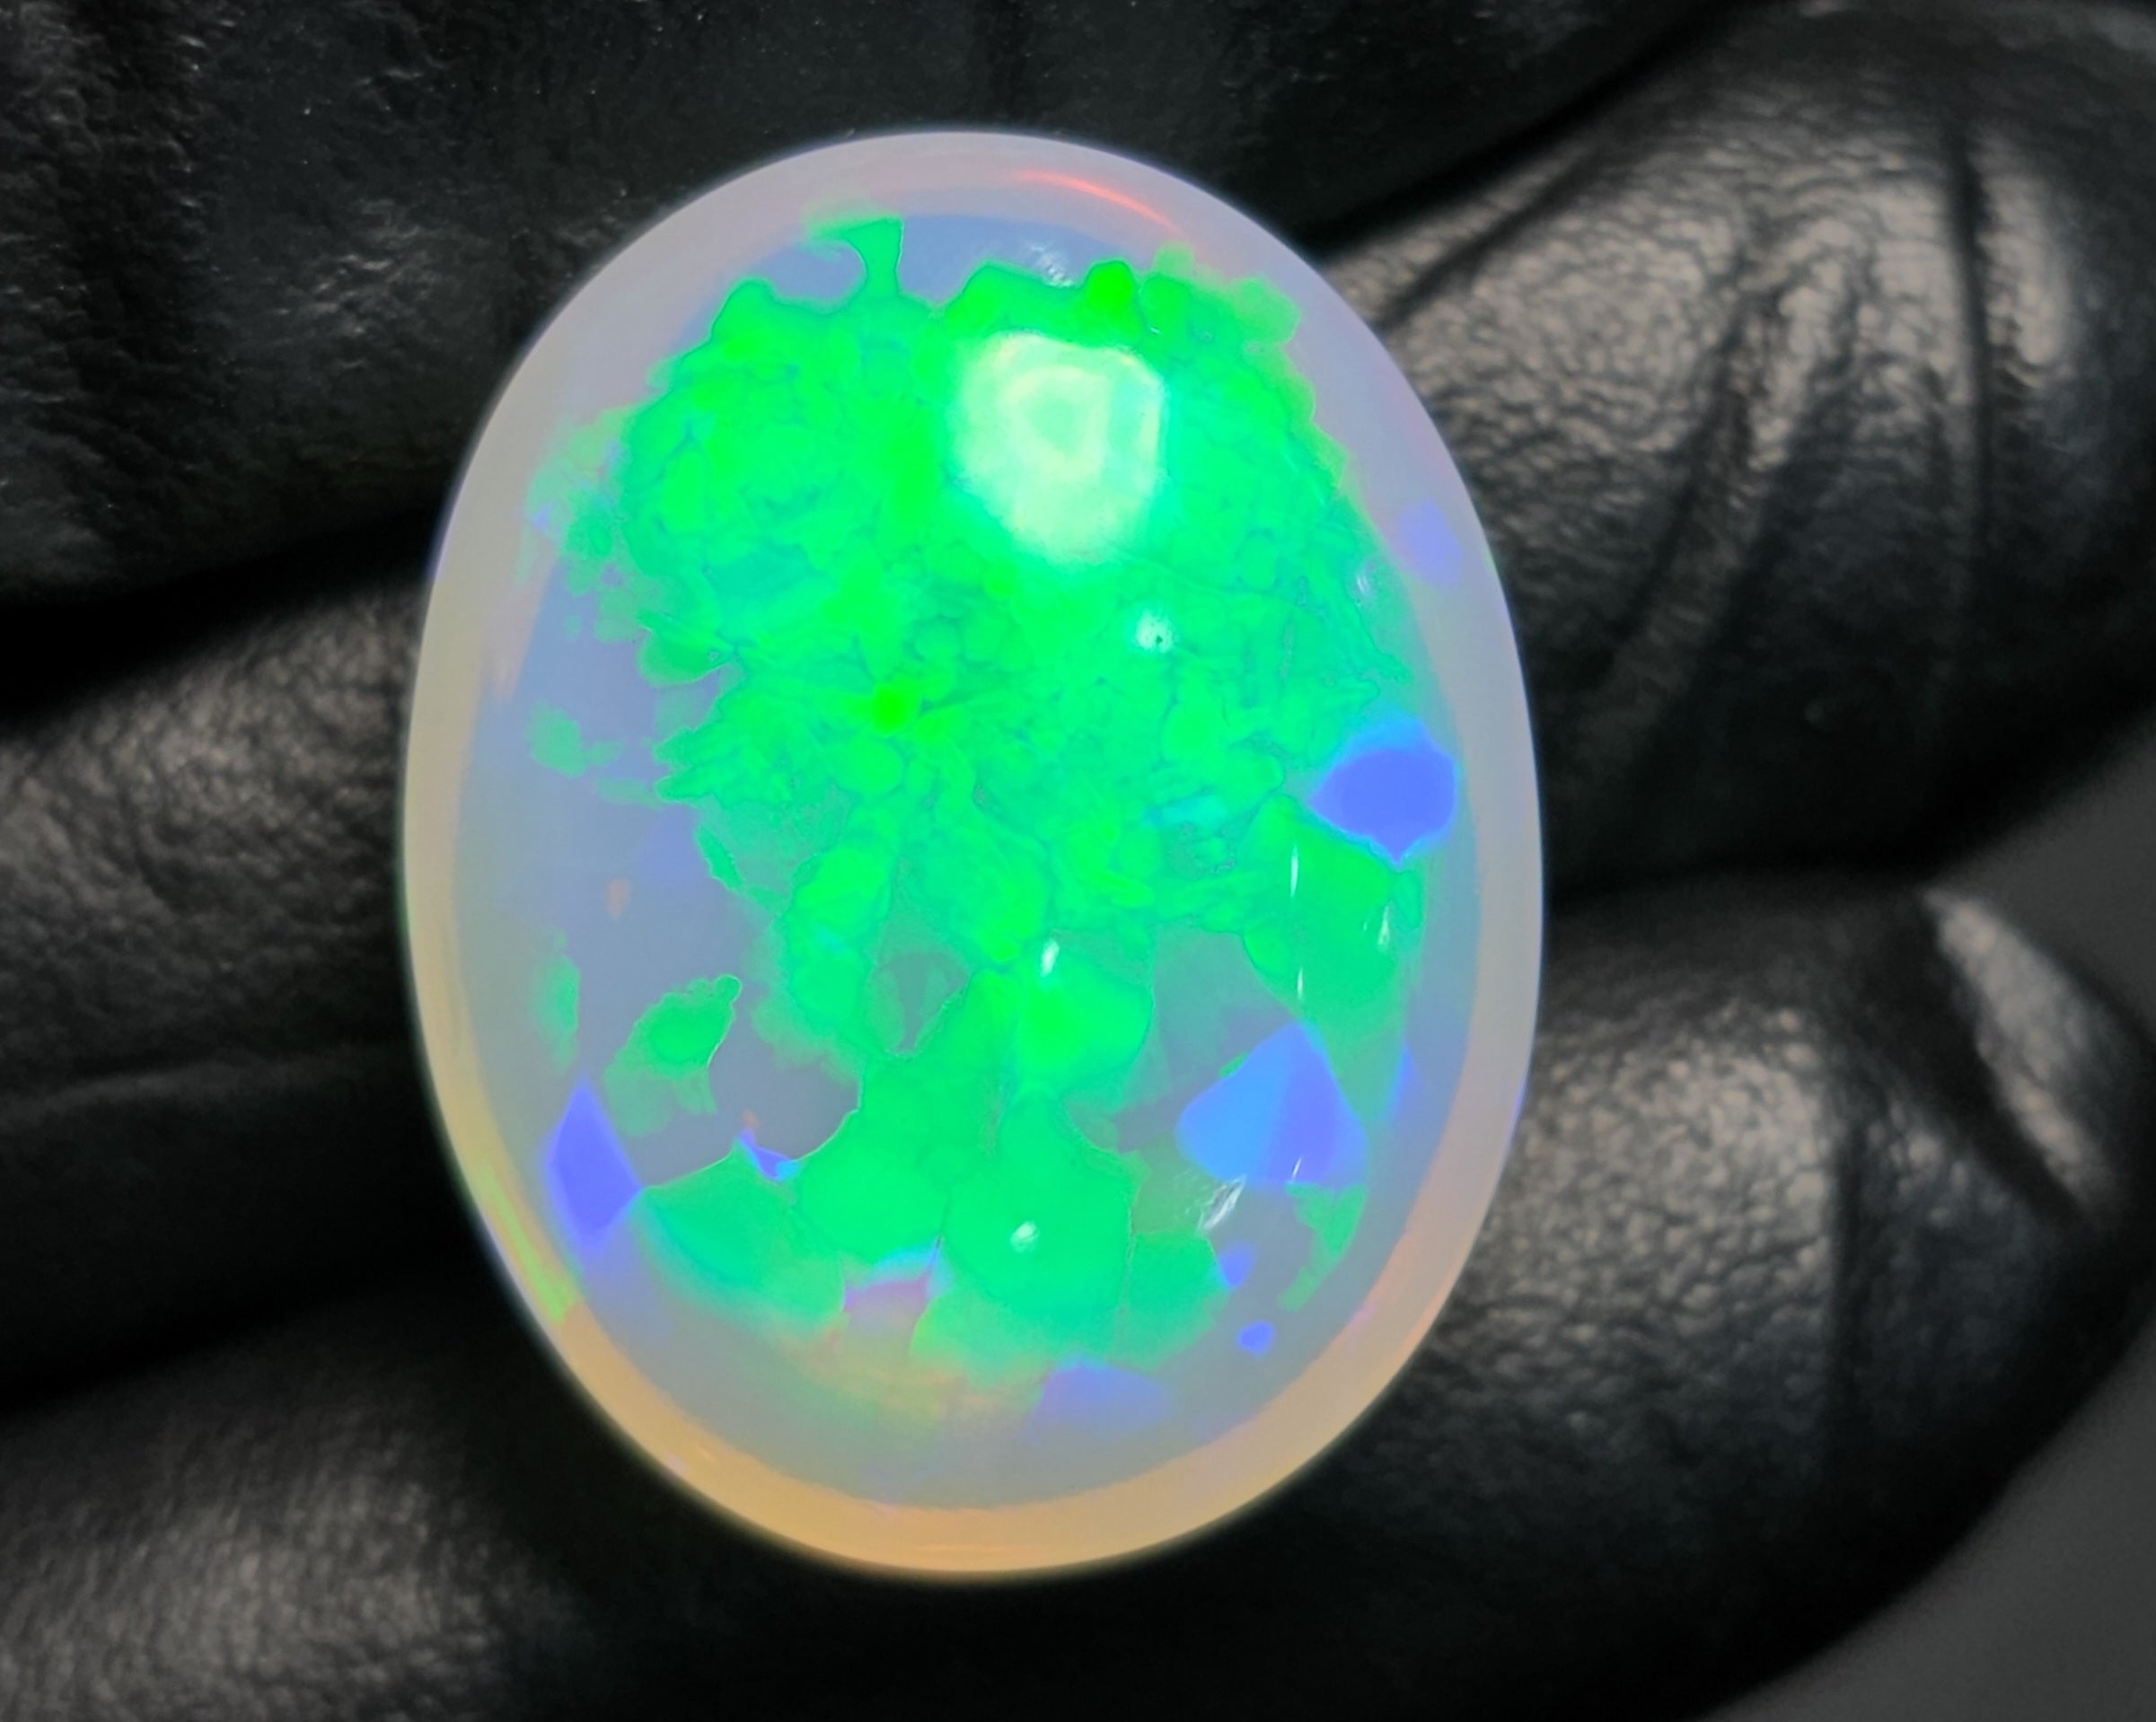 1 Pcs Of Natural Ethopian Opal Oval Shape  |WT: 22.7 Cts|Size: 23x18mm - The LabradoriteKing